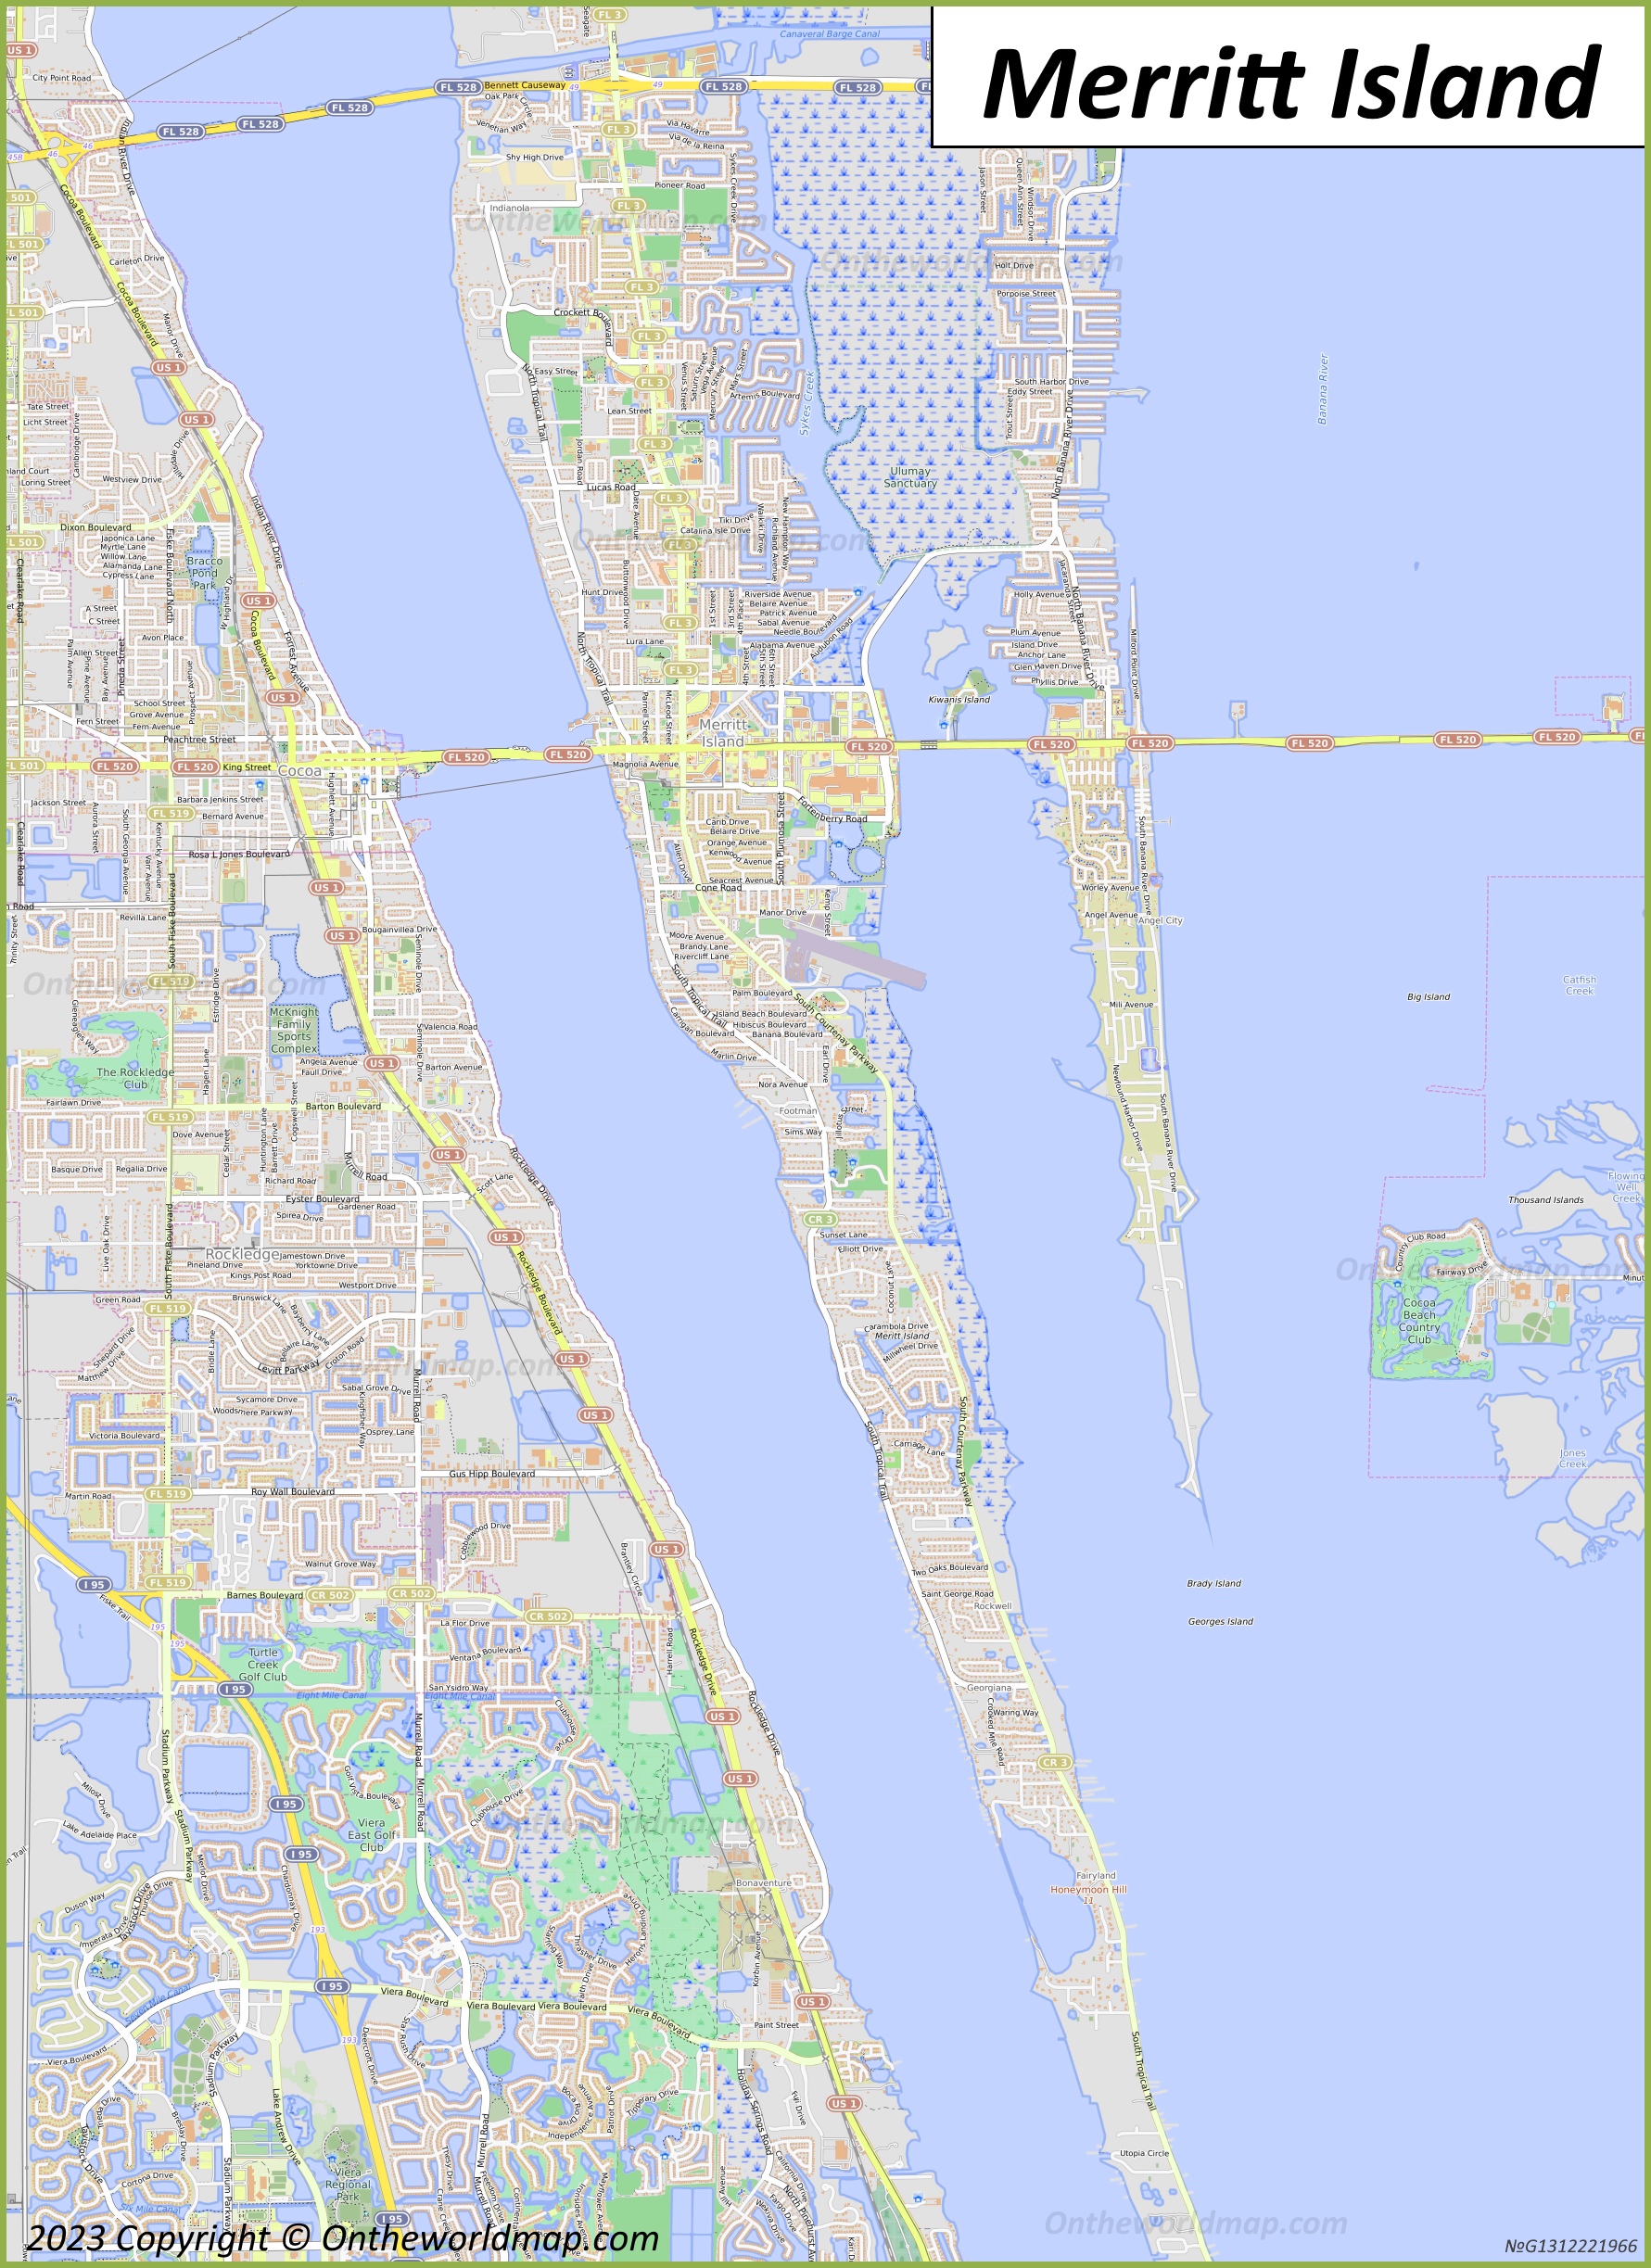 Merritt Island City Map